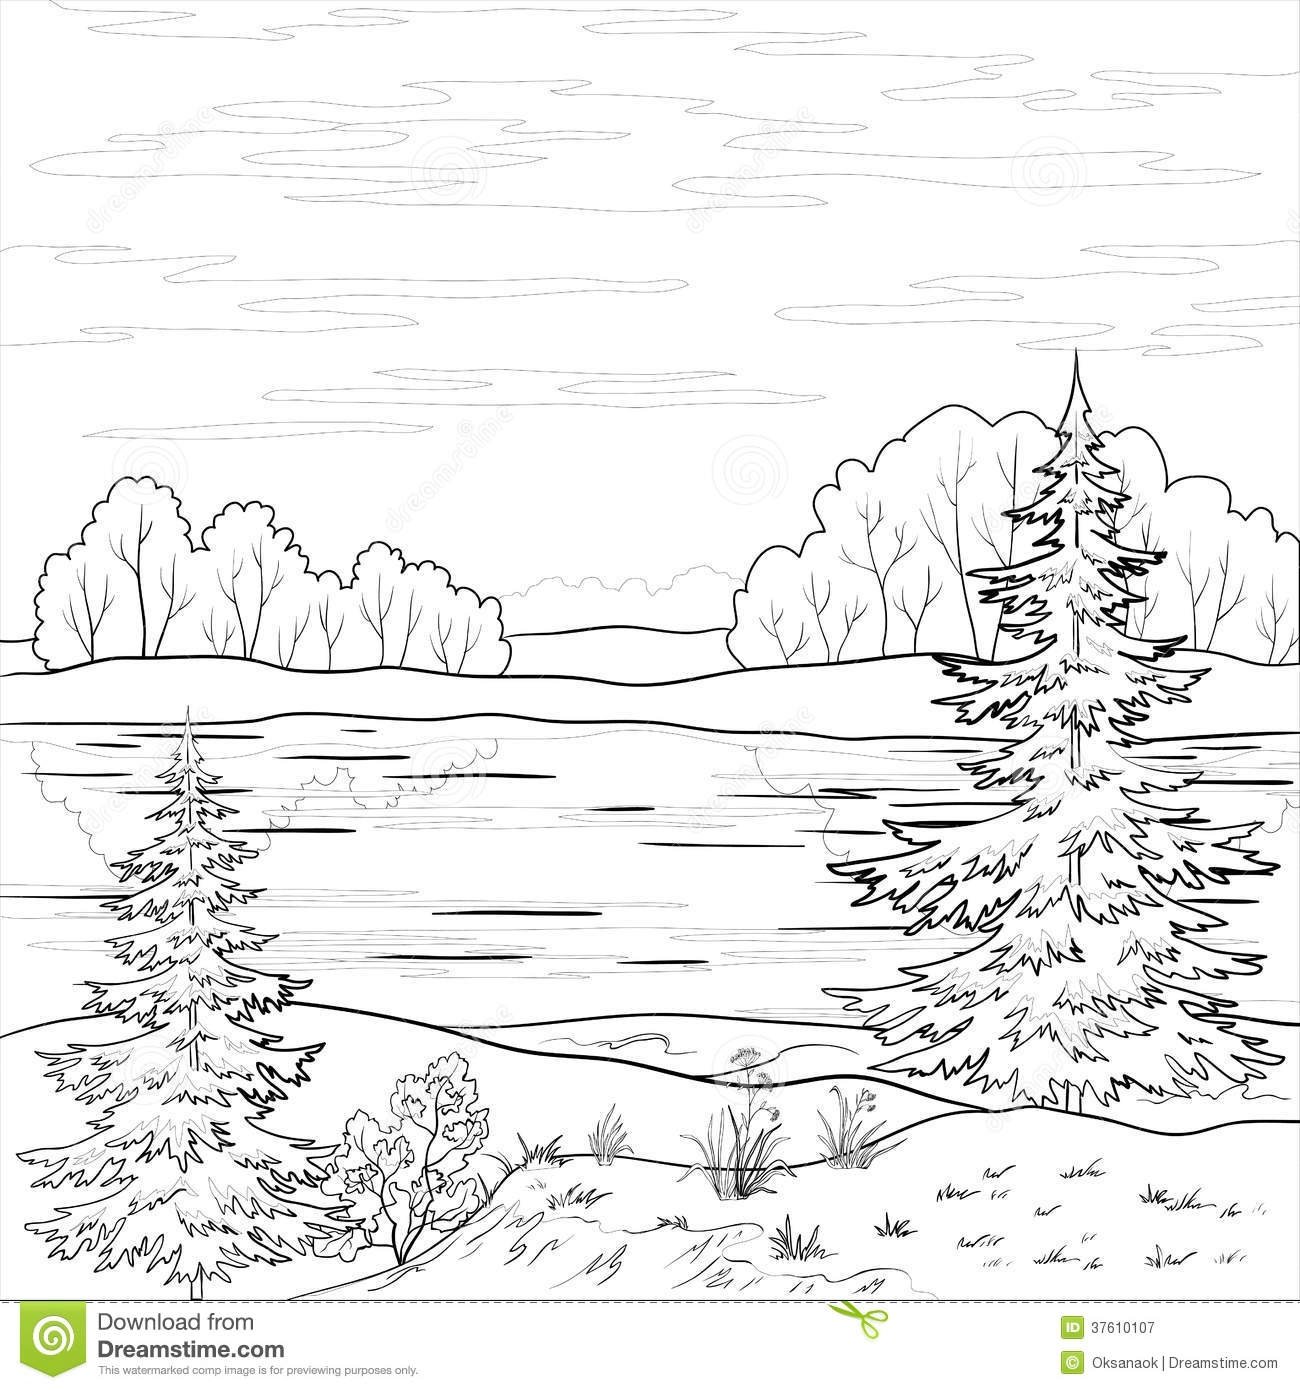 Лес и речка пейзаж карандашом